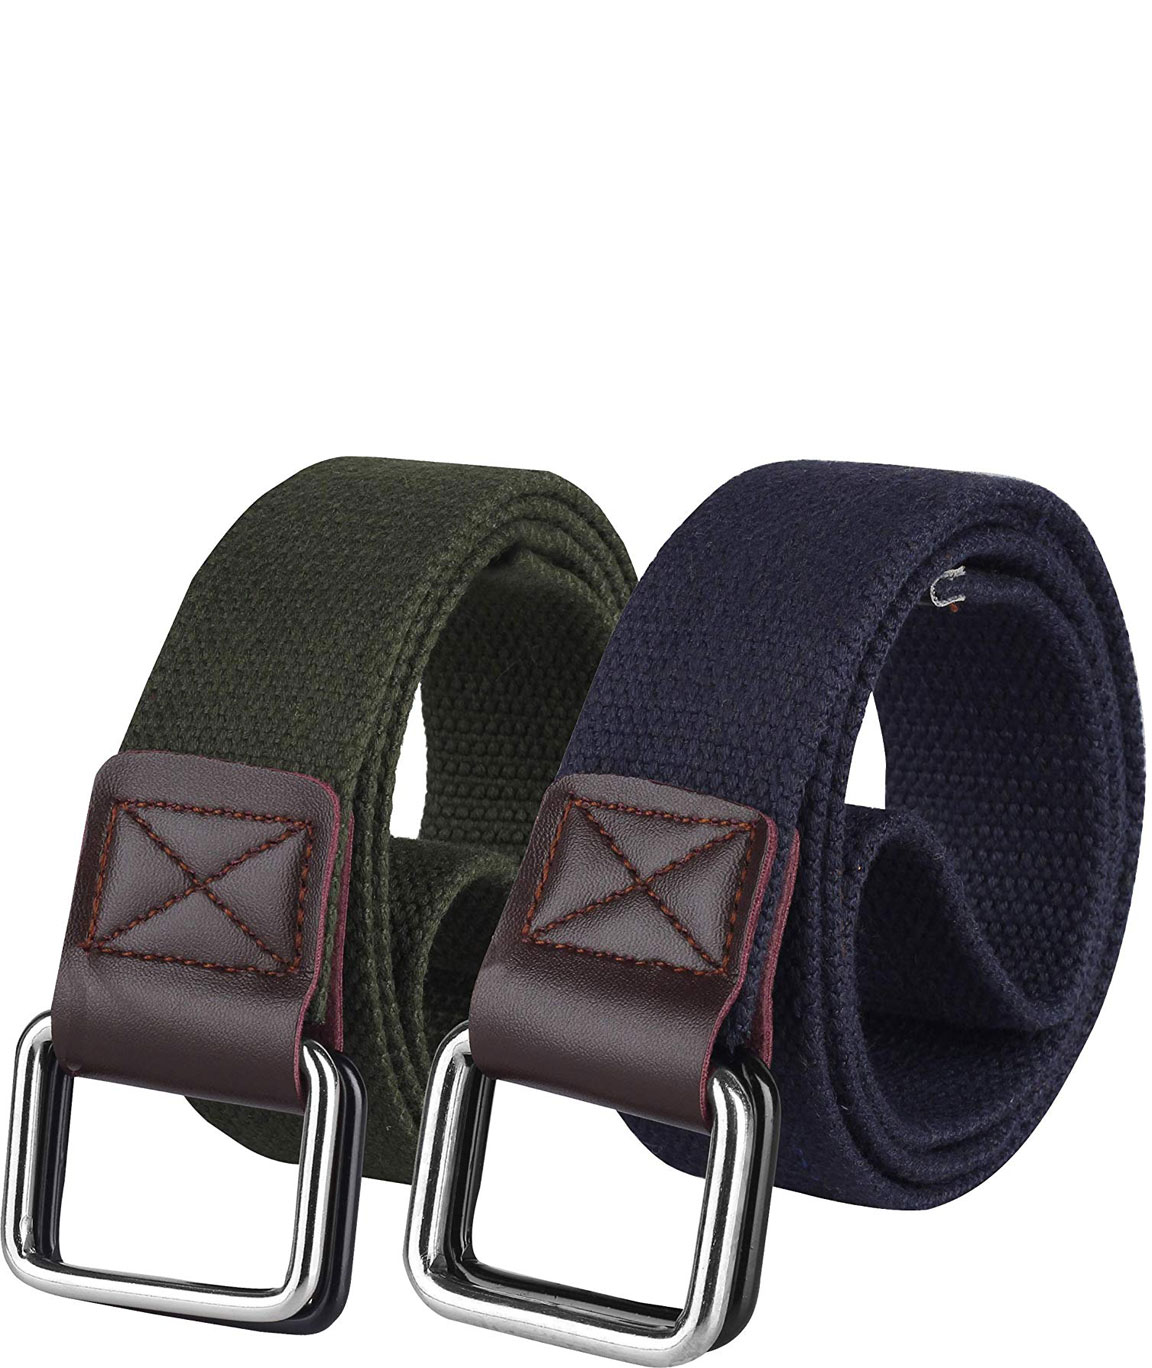 ZORO Cotton belt for men, belts for men under 200, gift for gents, belt for men stylish, gents belt, mens belt tan, blue, green, brown and khaki color CB40-40-2PC